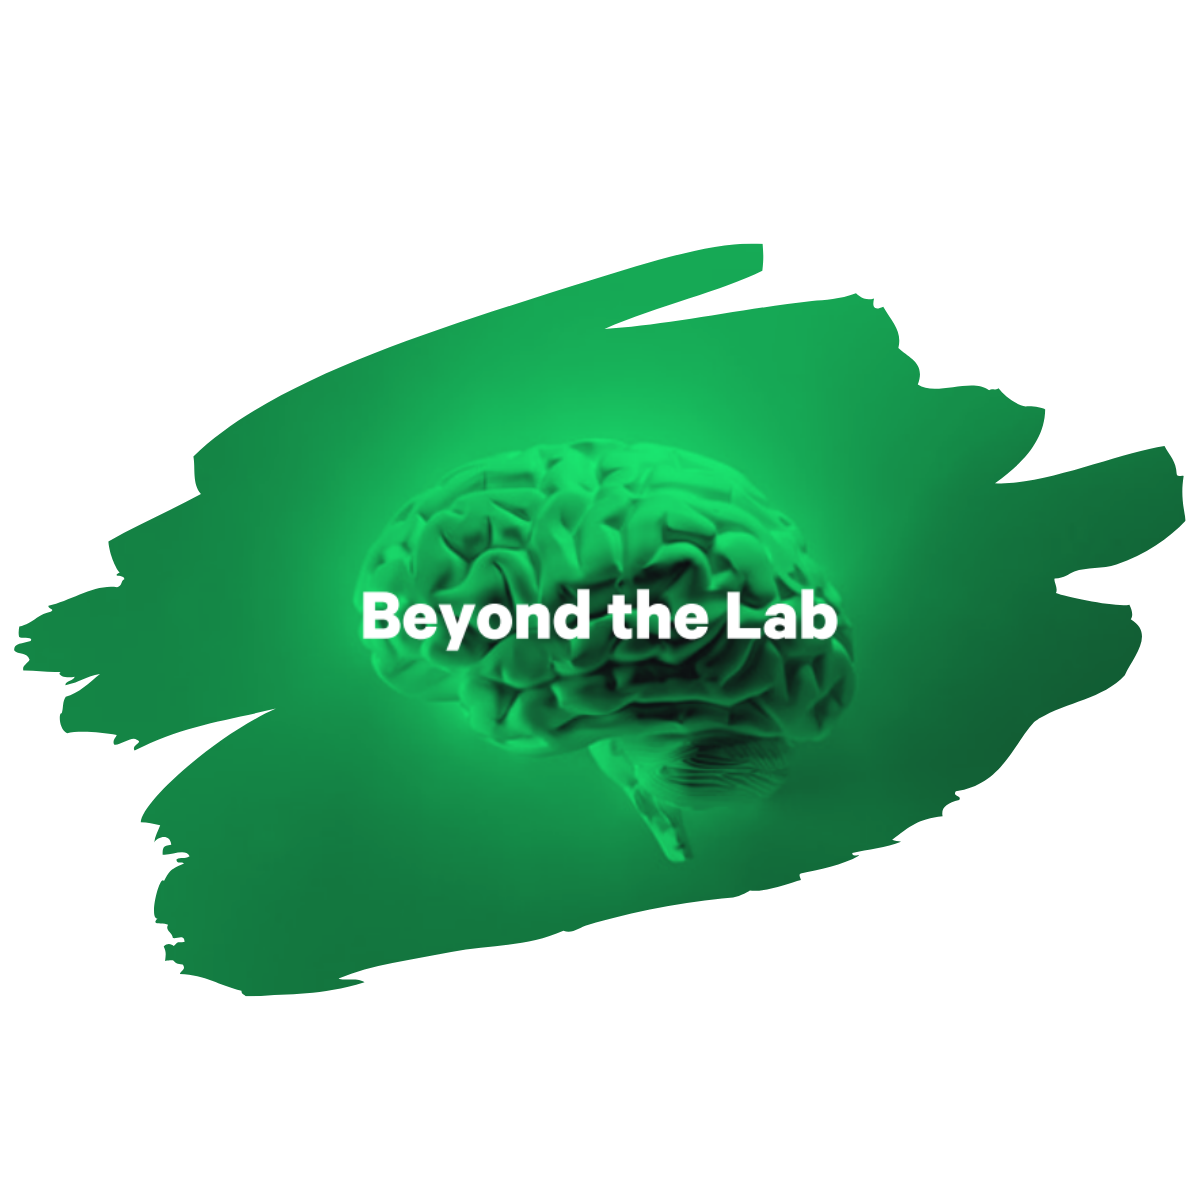 Beyond the Lab